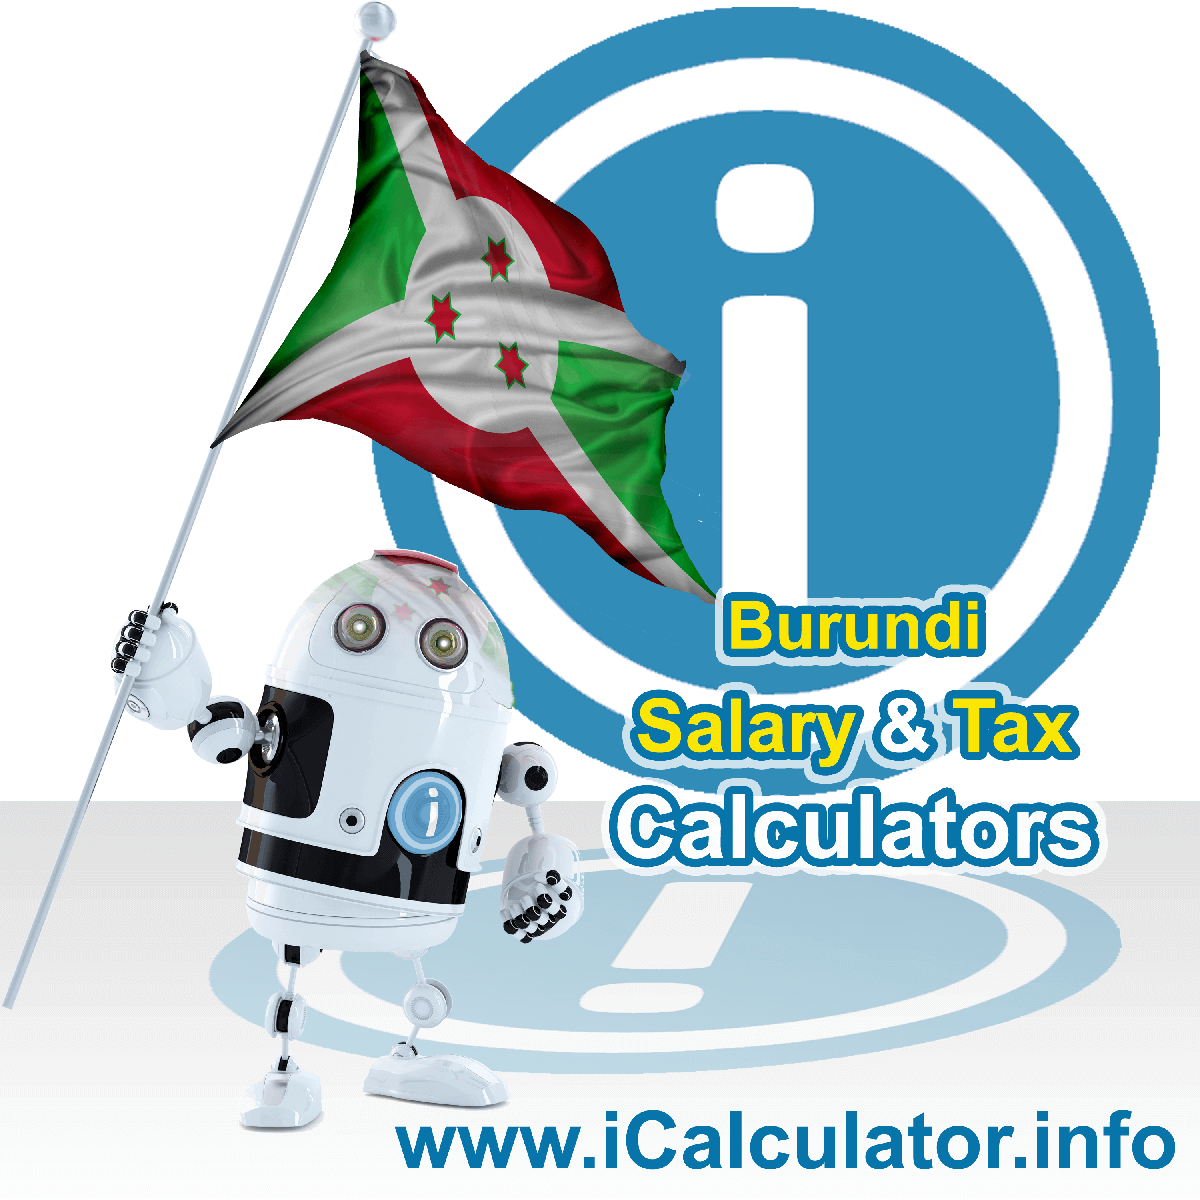 Burundi Tax Calculator. This image shows the Burundi flag and information relating to the tax formula for the Burundi Salary Calculator